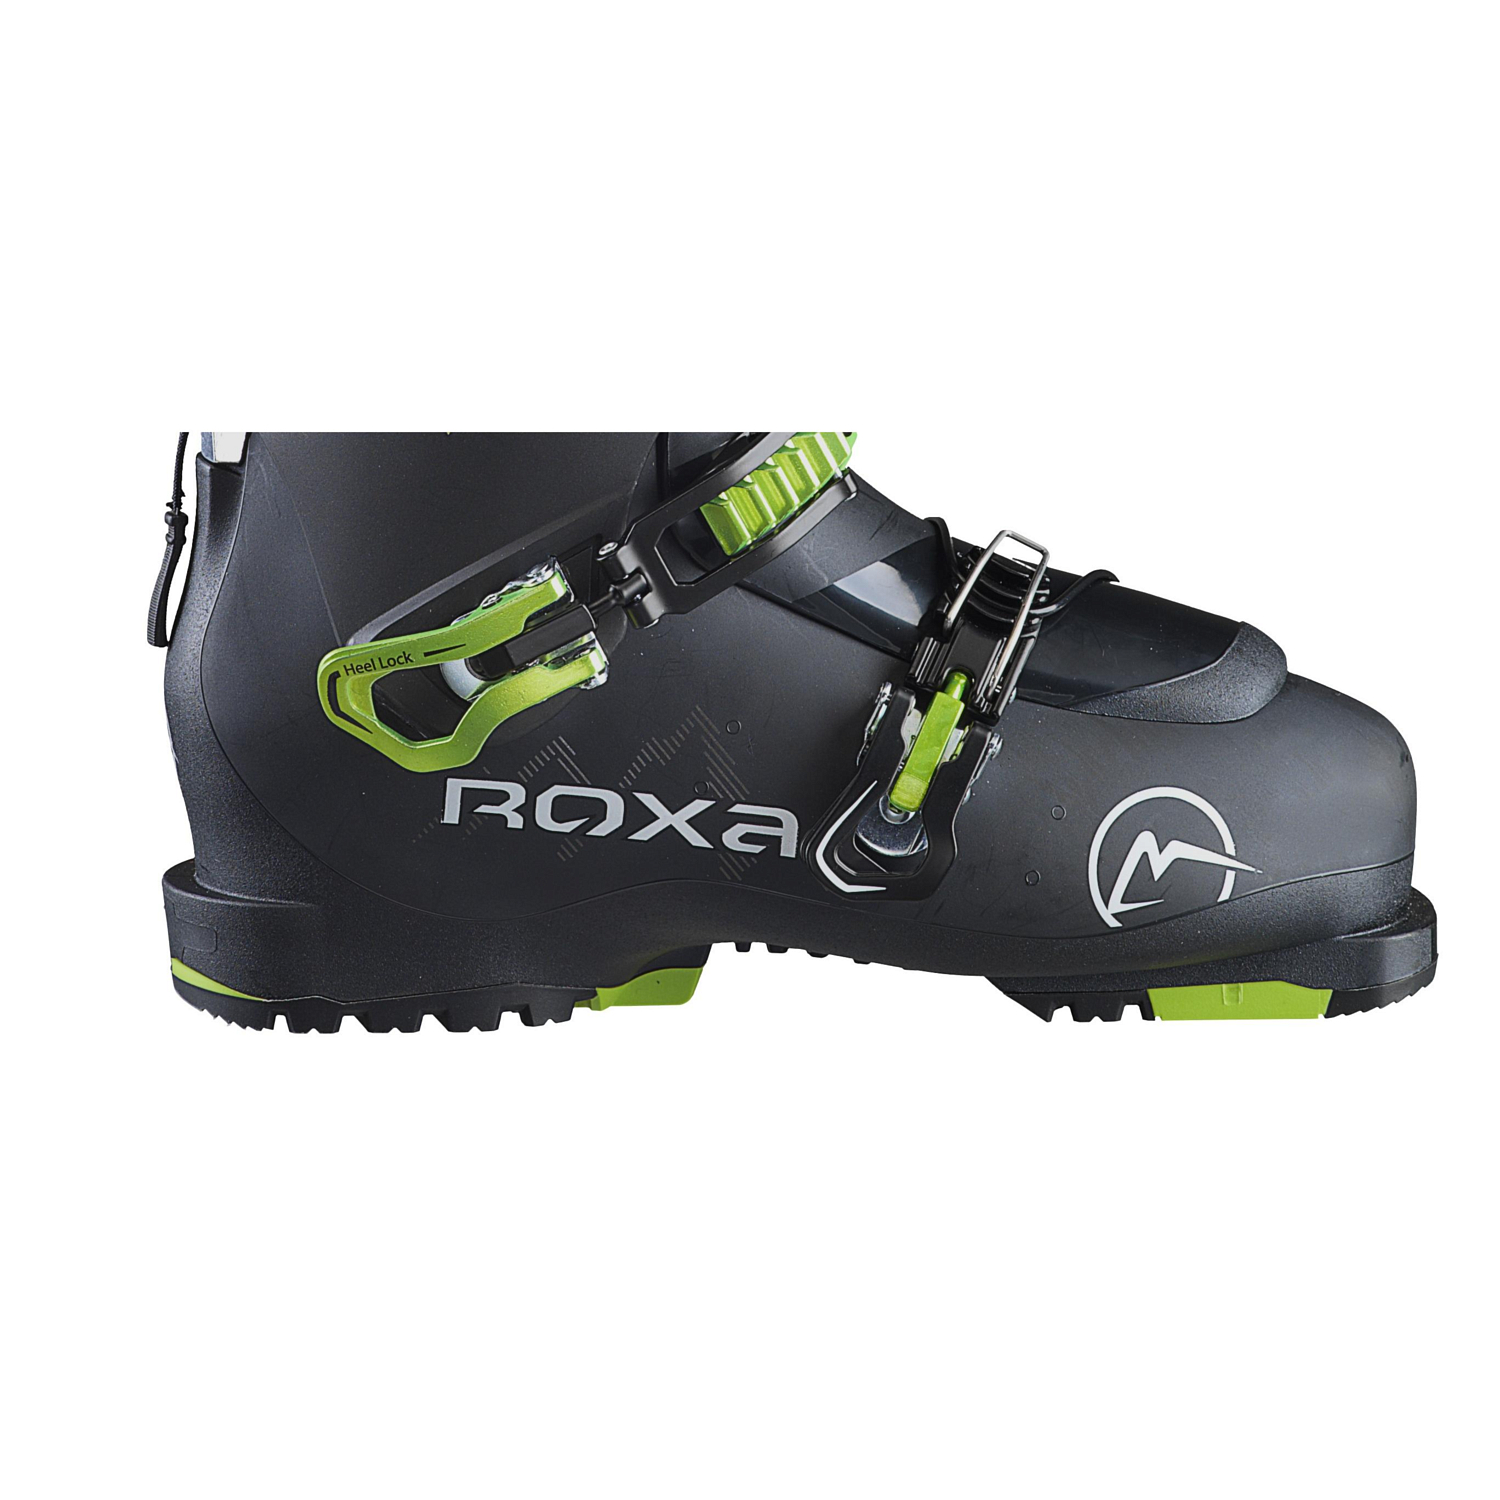 Горнолыжные ботинки ROXA R3 110 TI I.R. Black